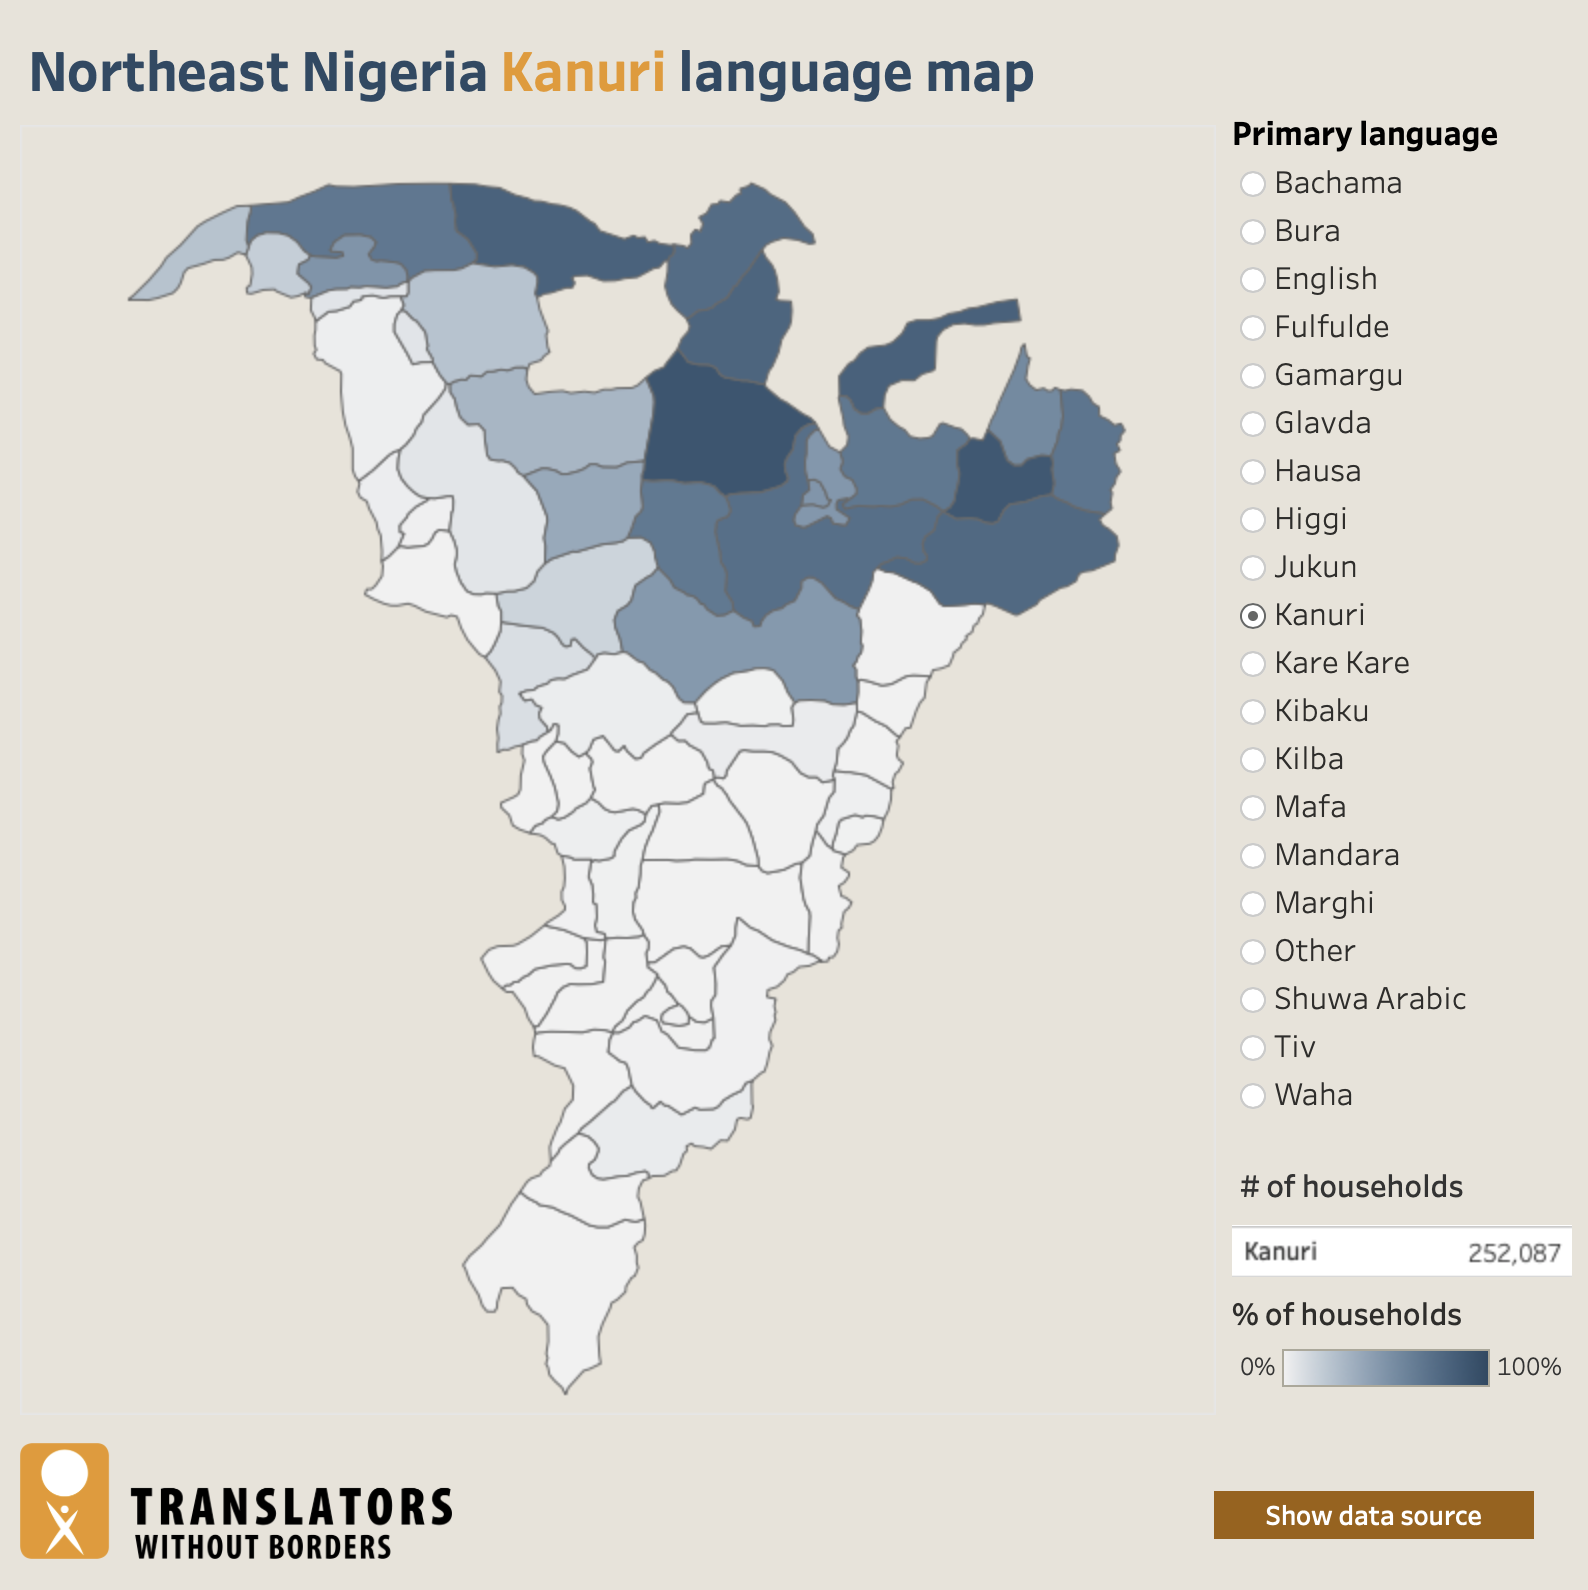 Language data for Nigeria Translators without Borders